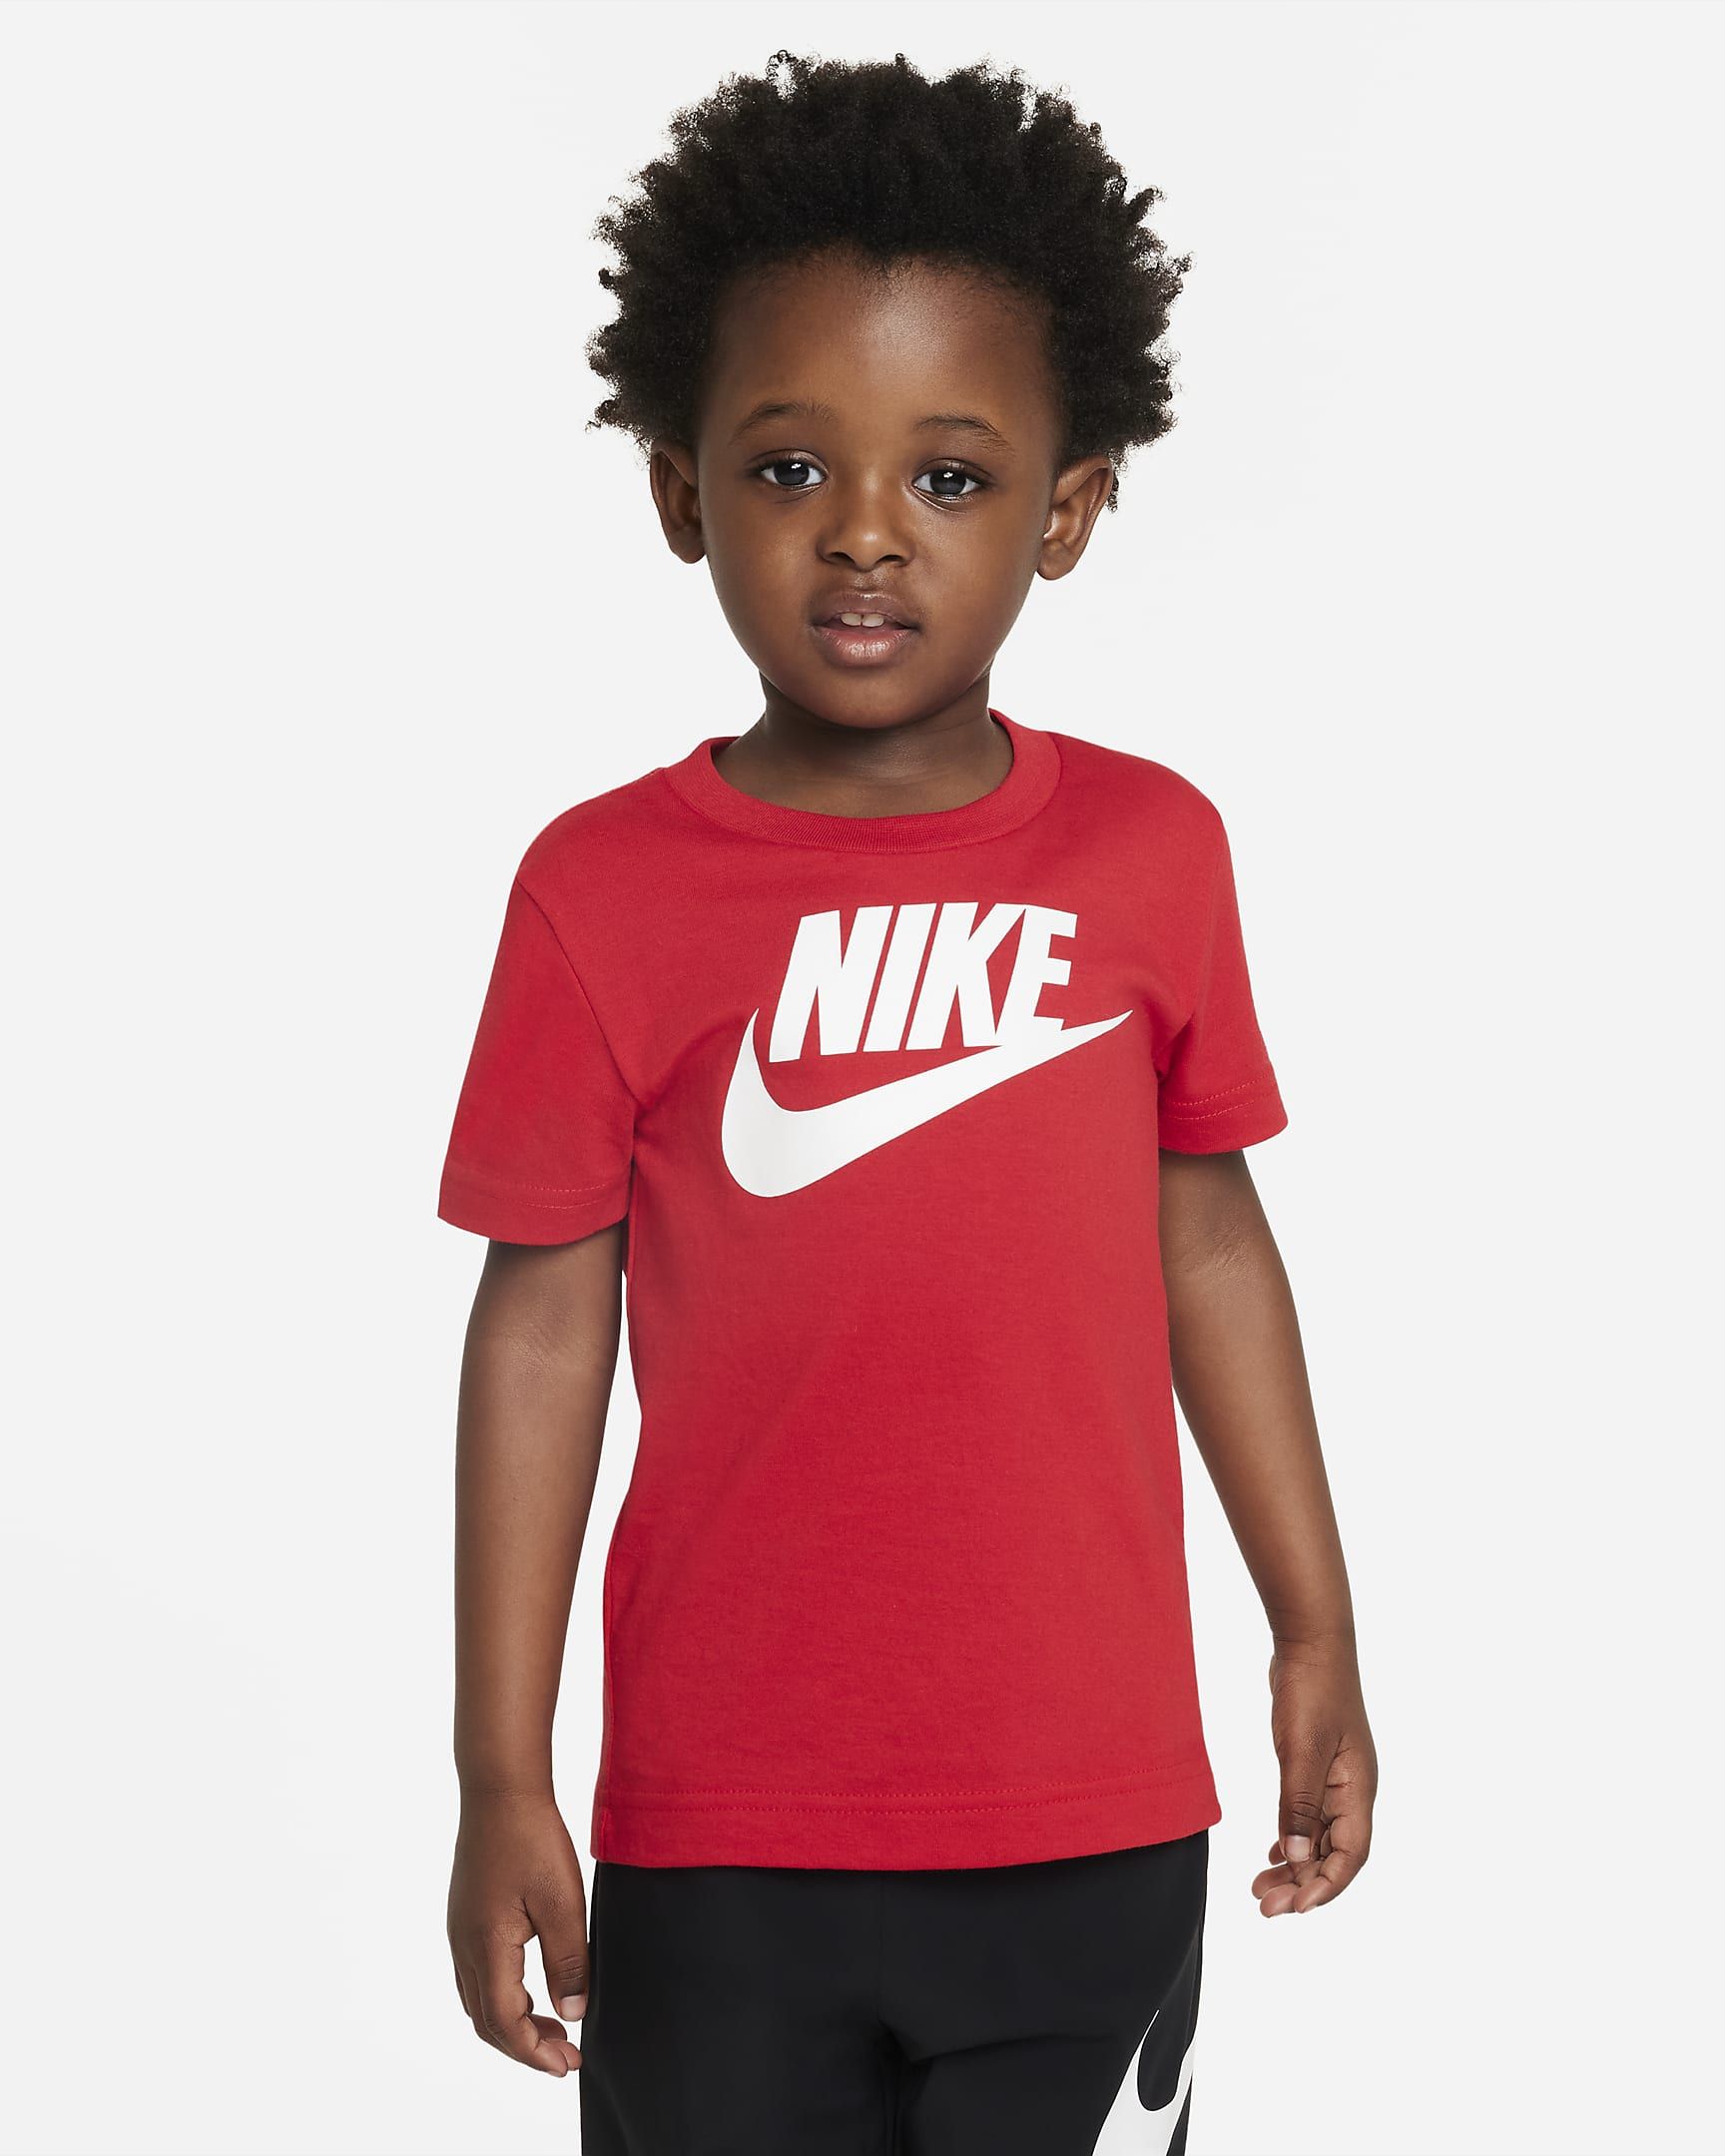 Nike Toddler T-Shirt. Nike.com | Nike (US)